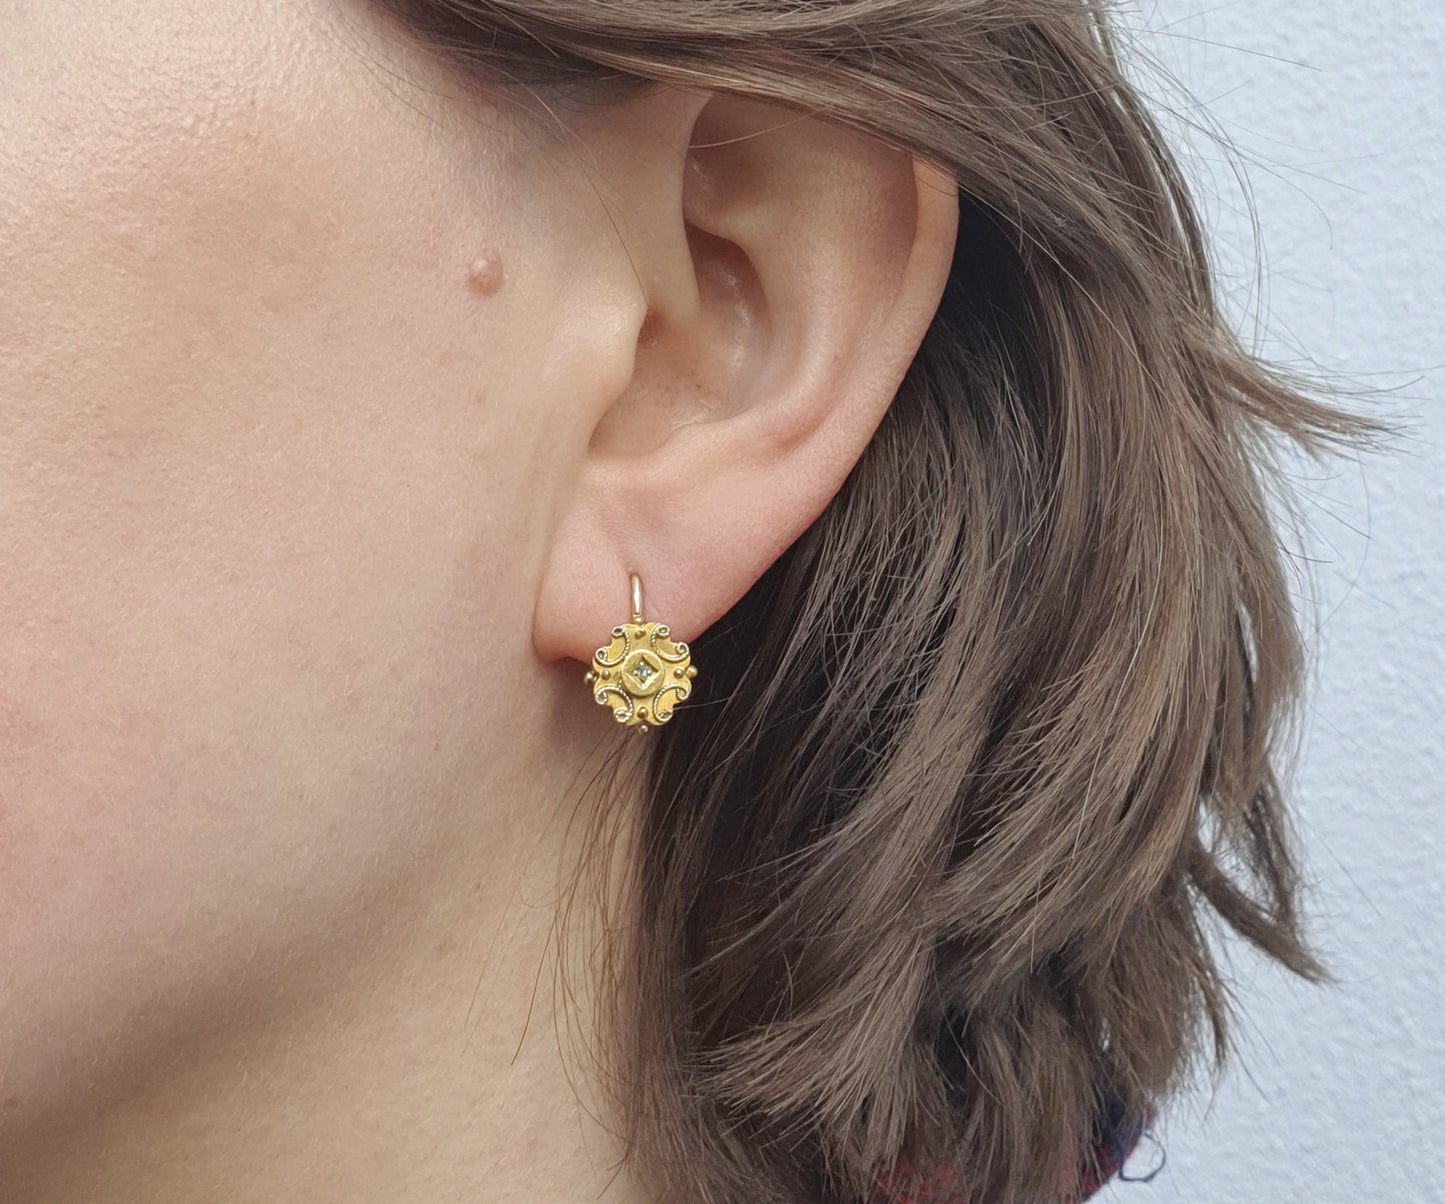 Edwardian Gold and Diamond Drop Earrings